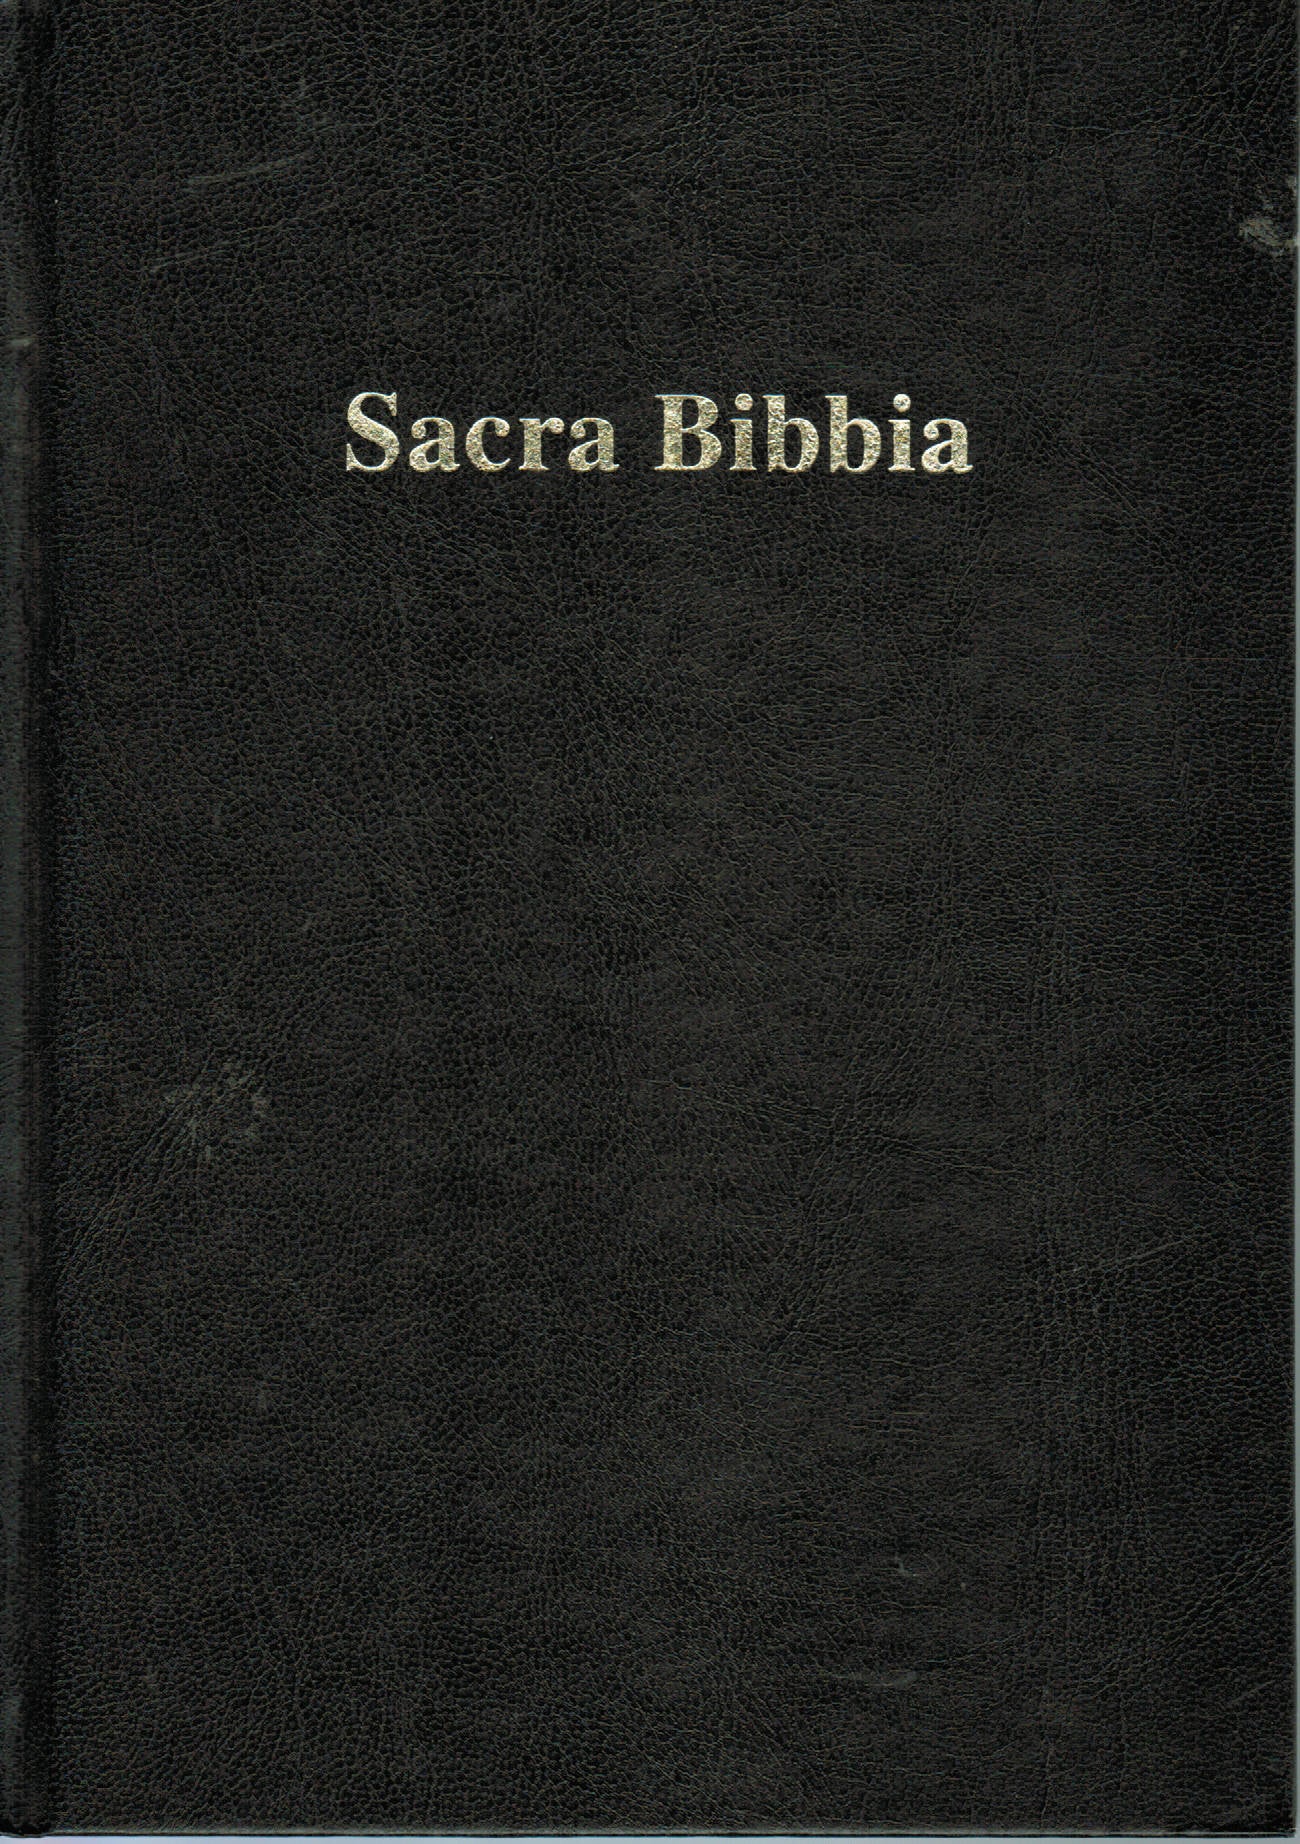 Sacra Bibbia [Italian Bible - Diodati version] – Reformed Book Services